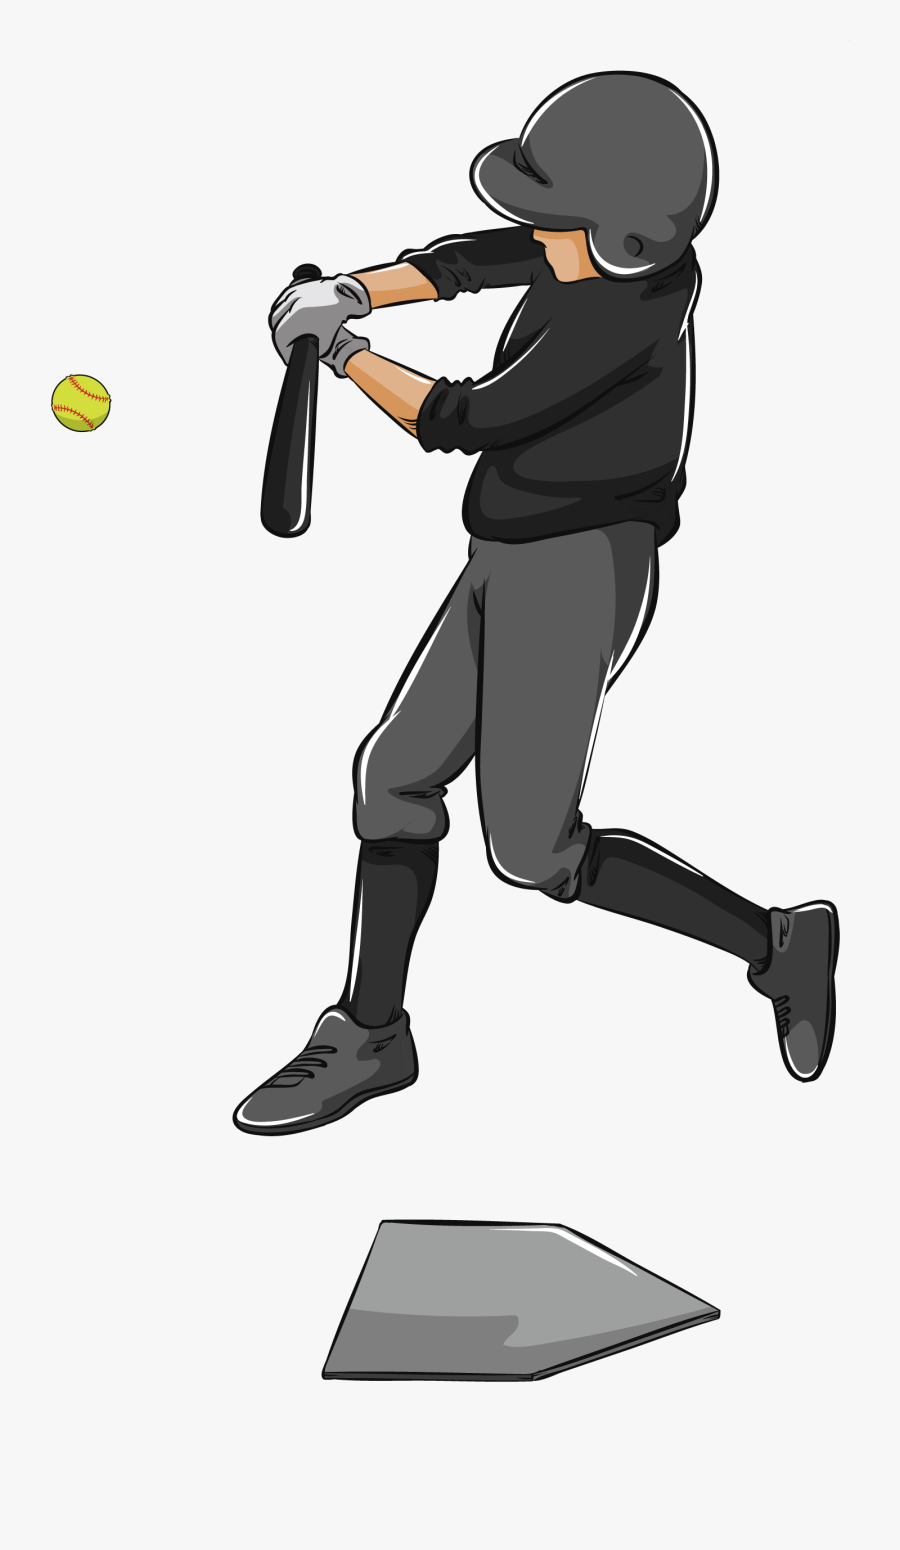 Moving Swinging Baseball Bat Clipart - Practice Softball Cartoon, Transparent Clipart